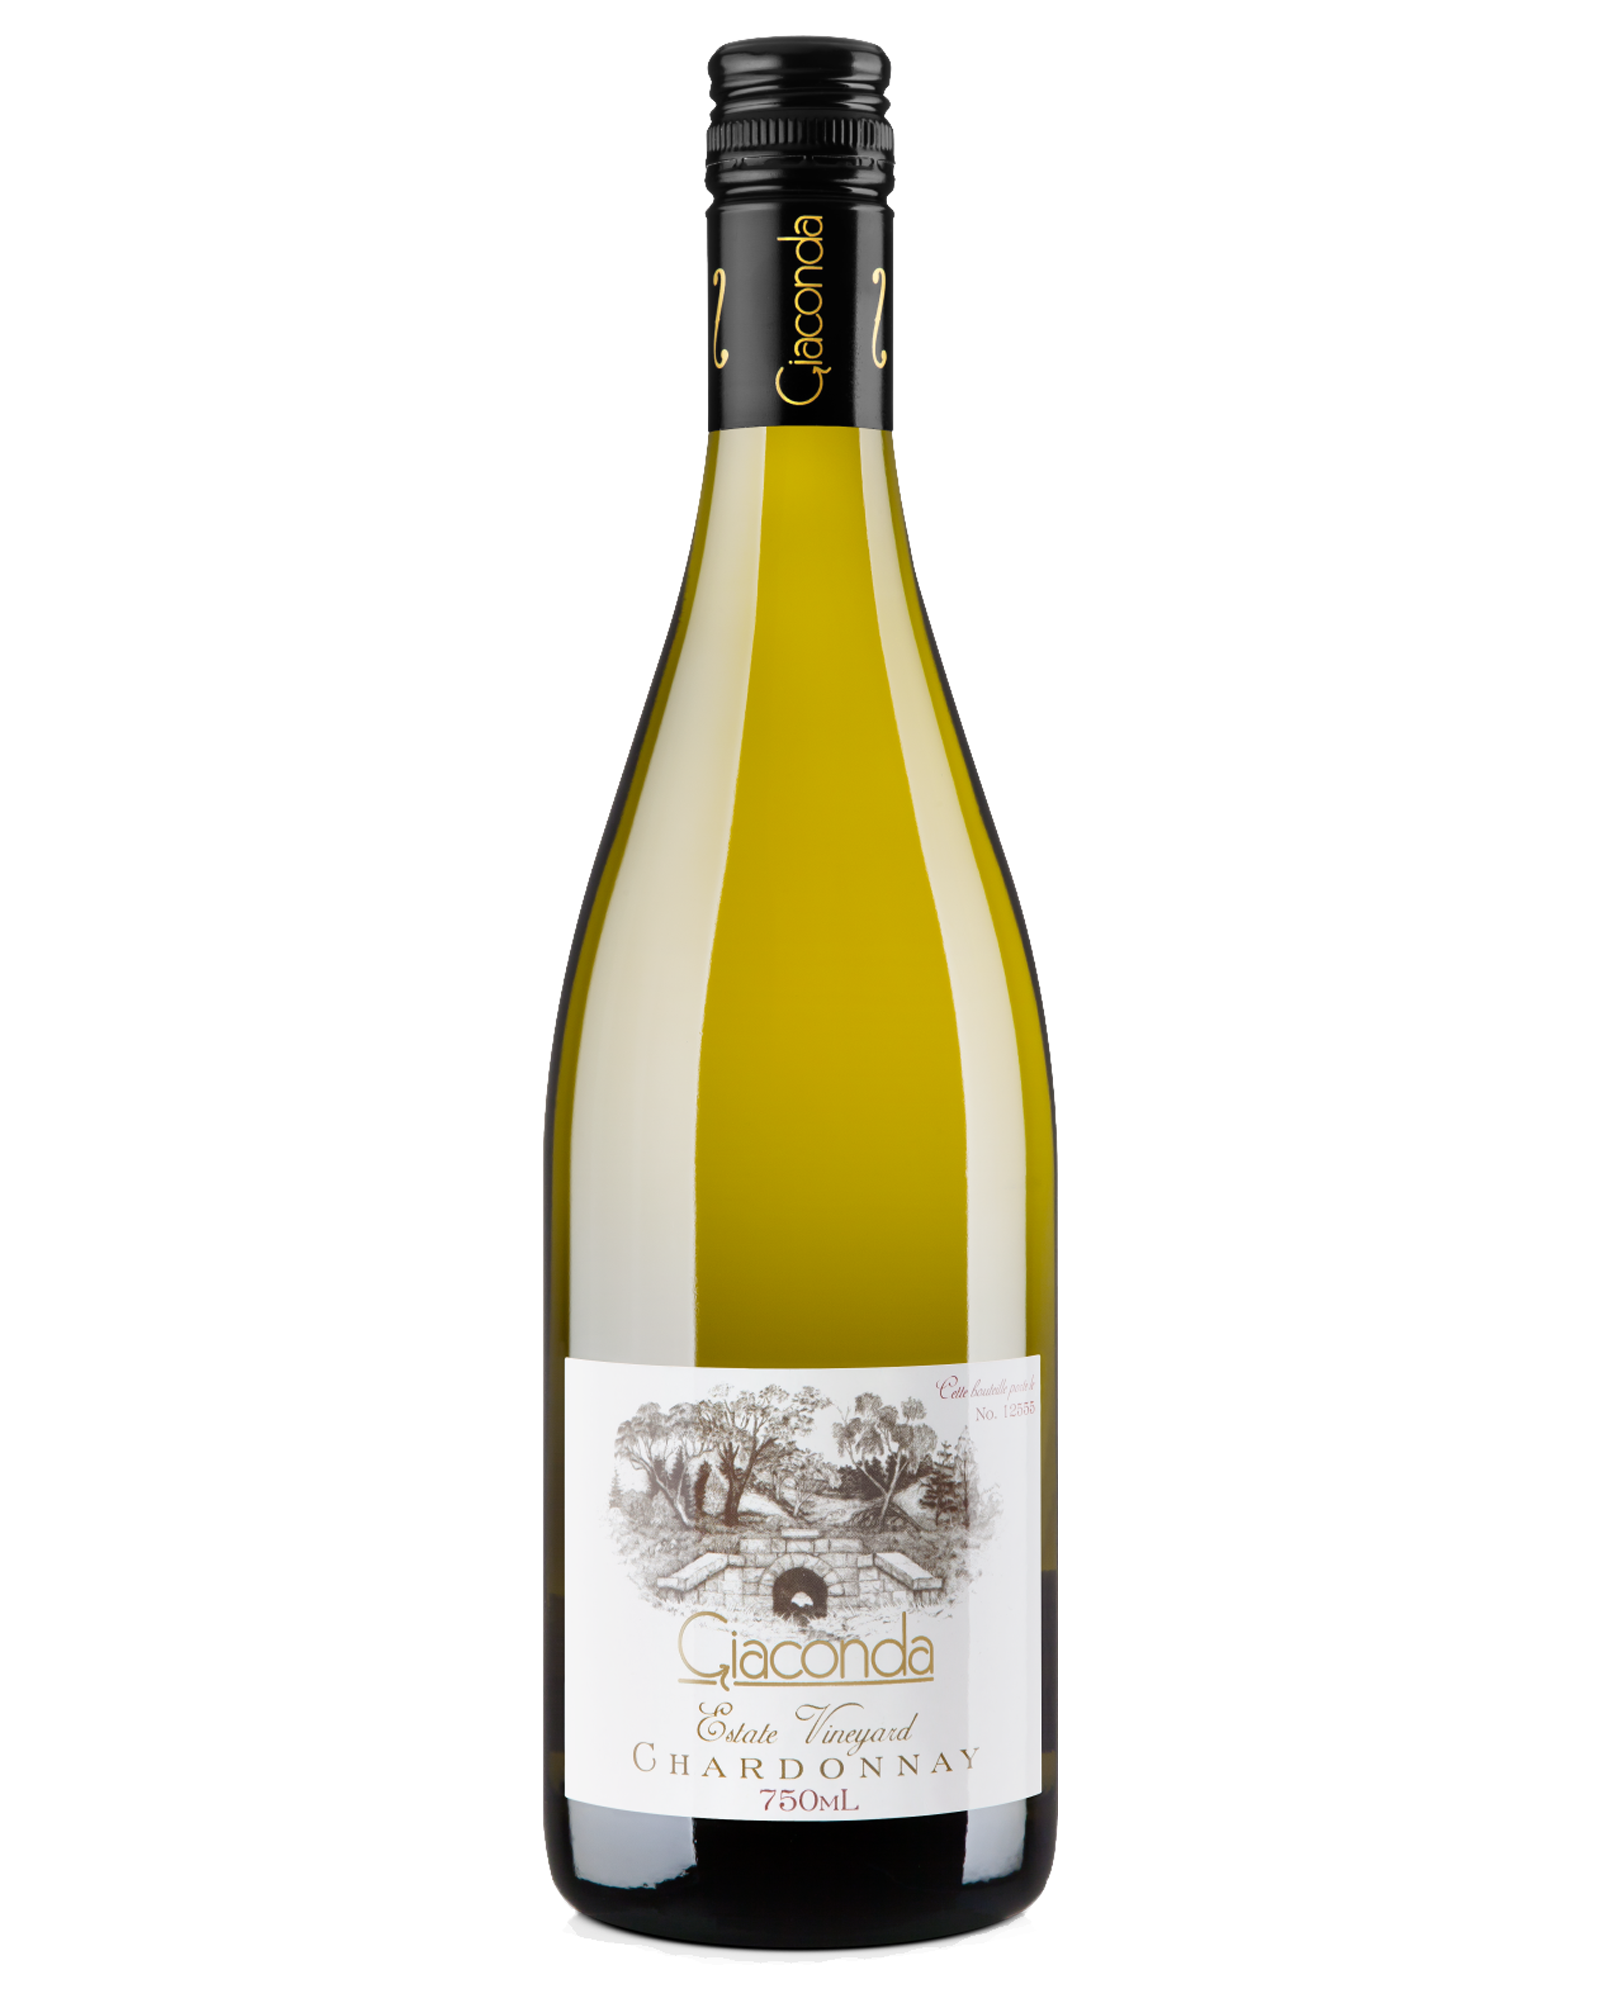 Giaconda Estate Vineyard Chardonnay 2016